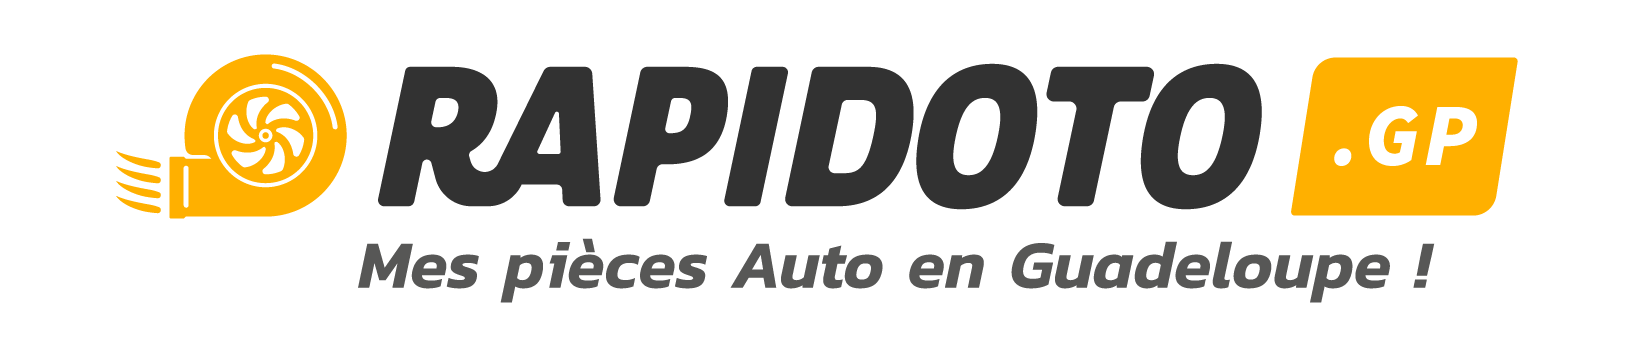 Rapidoto logo